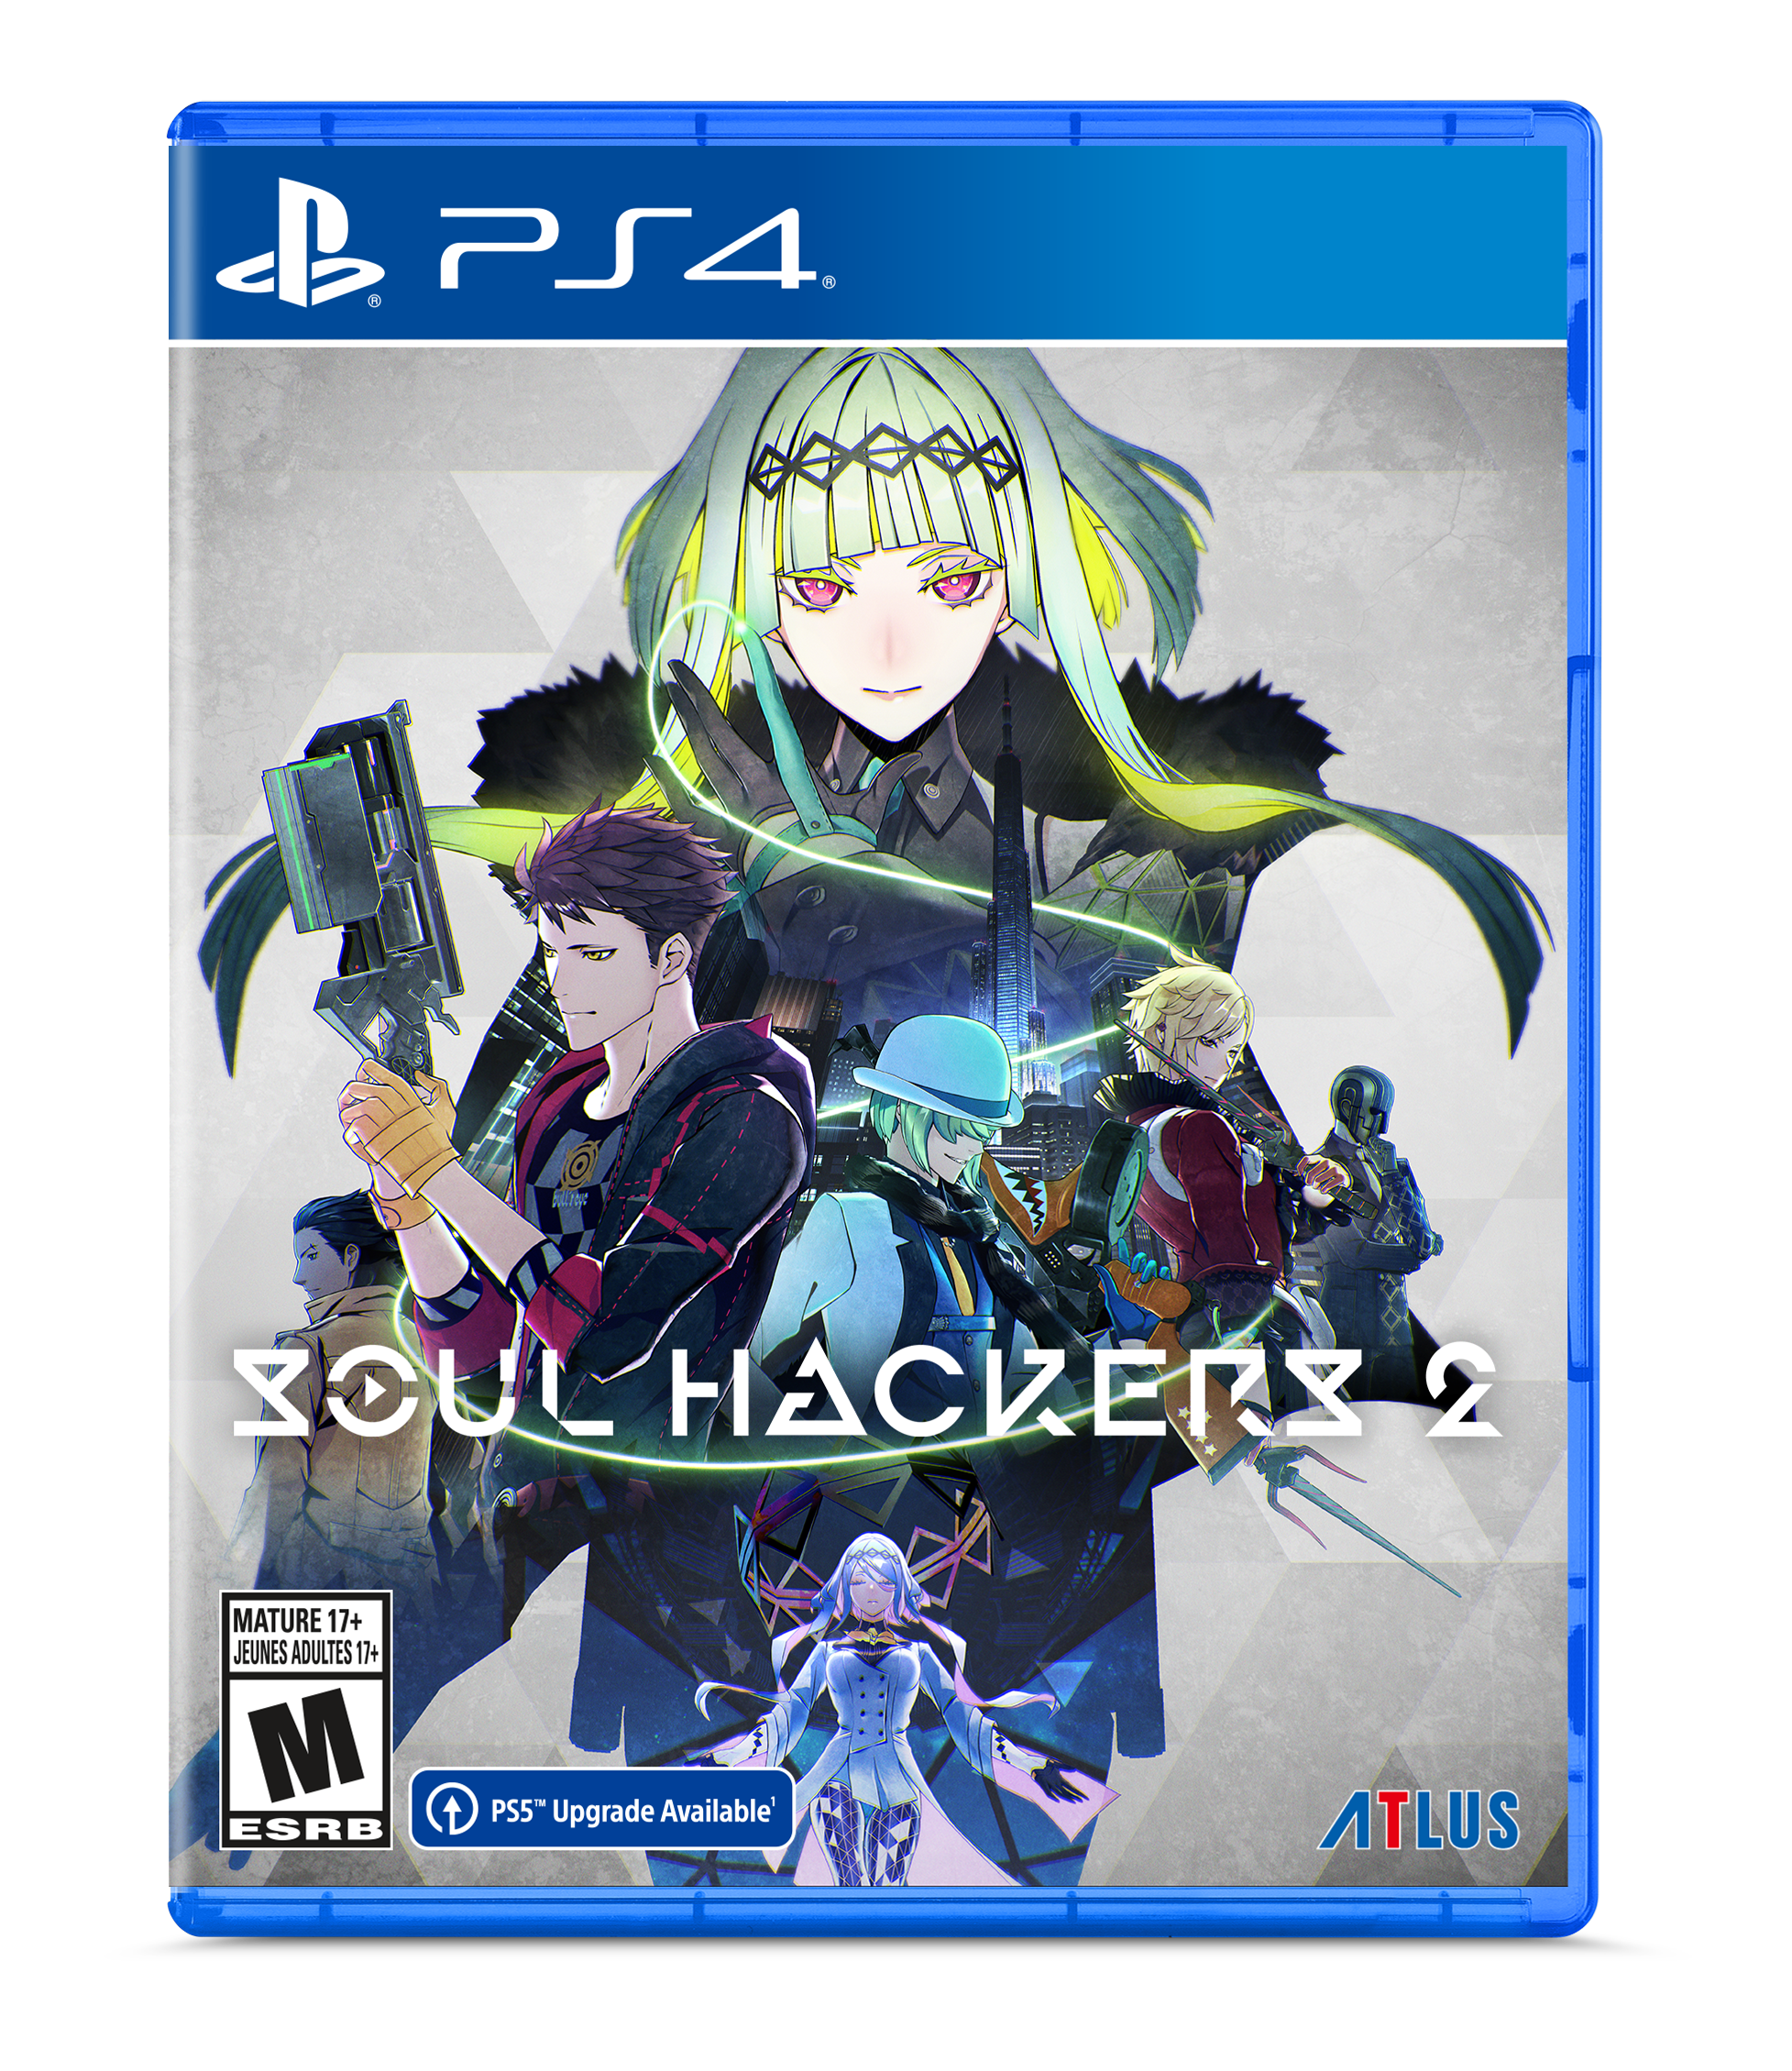 Soul Hackers 2 Launch Edition - PlayStation 4 | PlayStation 4 | GameStop